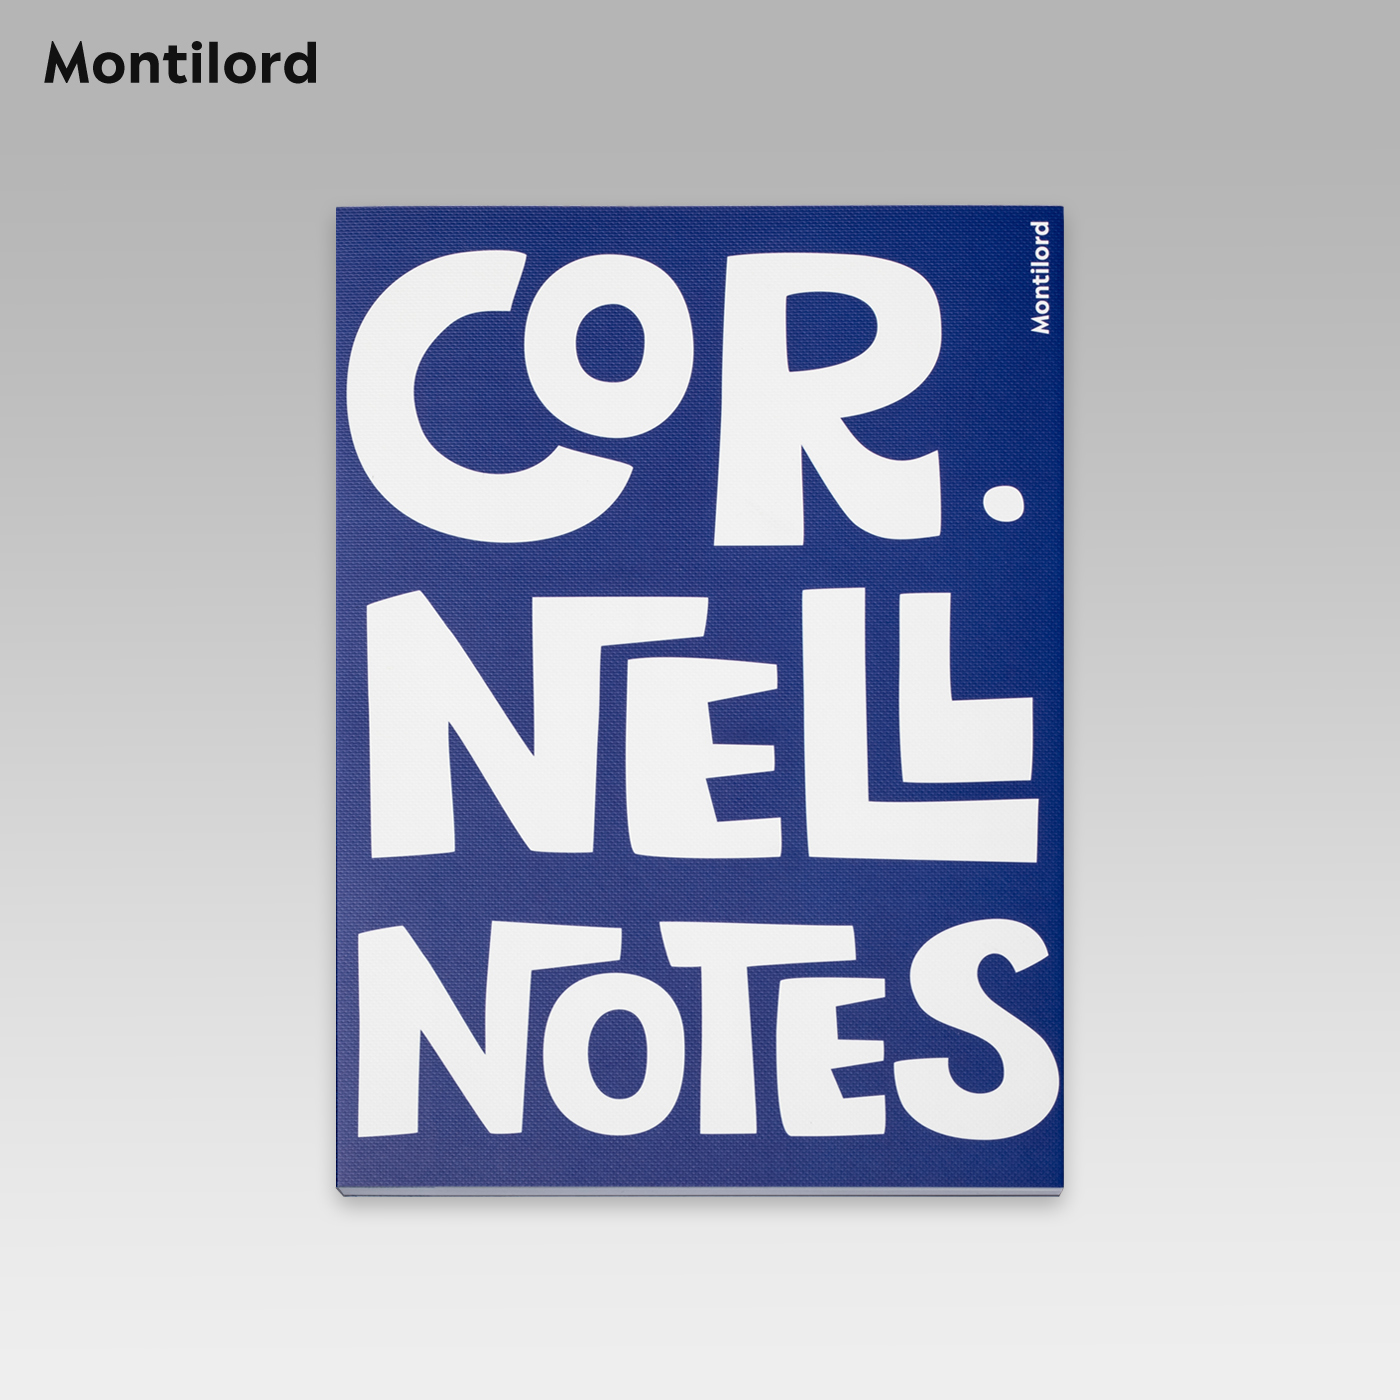 Montilord 『Montilord』B5康奈尔横线笔记本 文具加厚课堂高效考研英语5R笔记法好写顺滑不易洇墨防水宝石蓝锁线拍照 22.5元